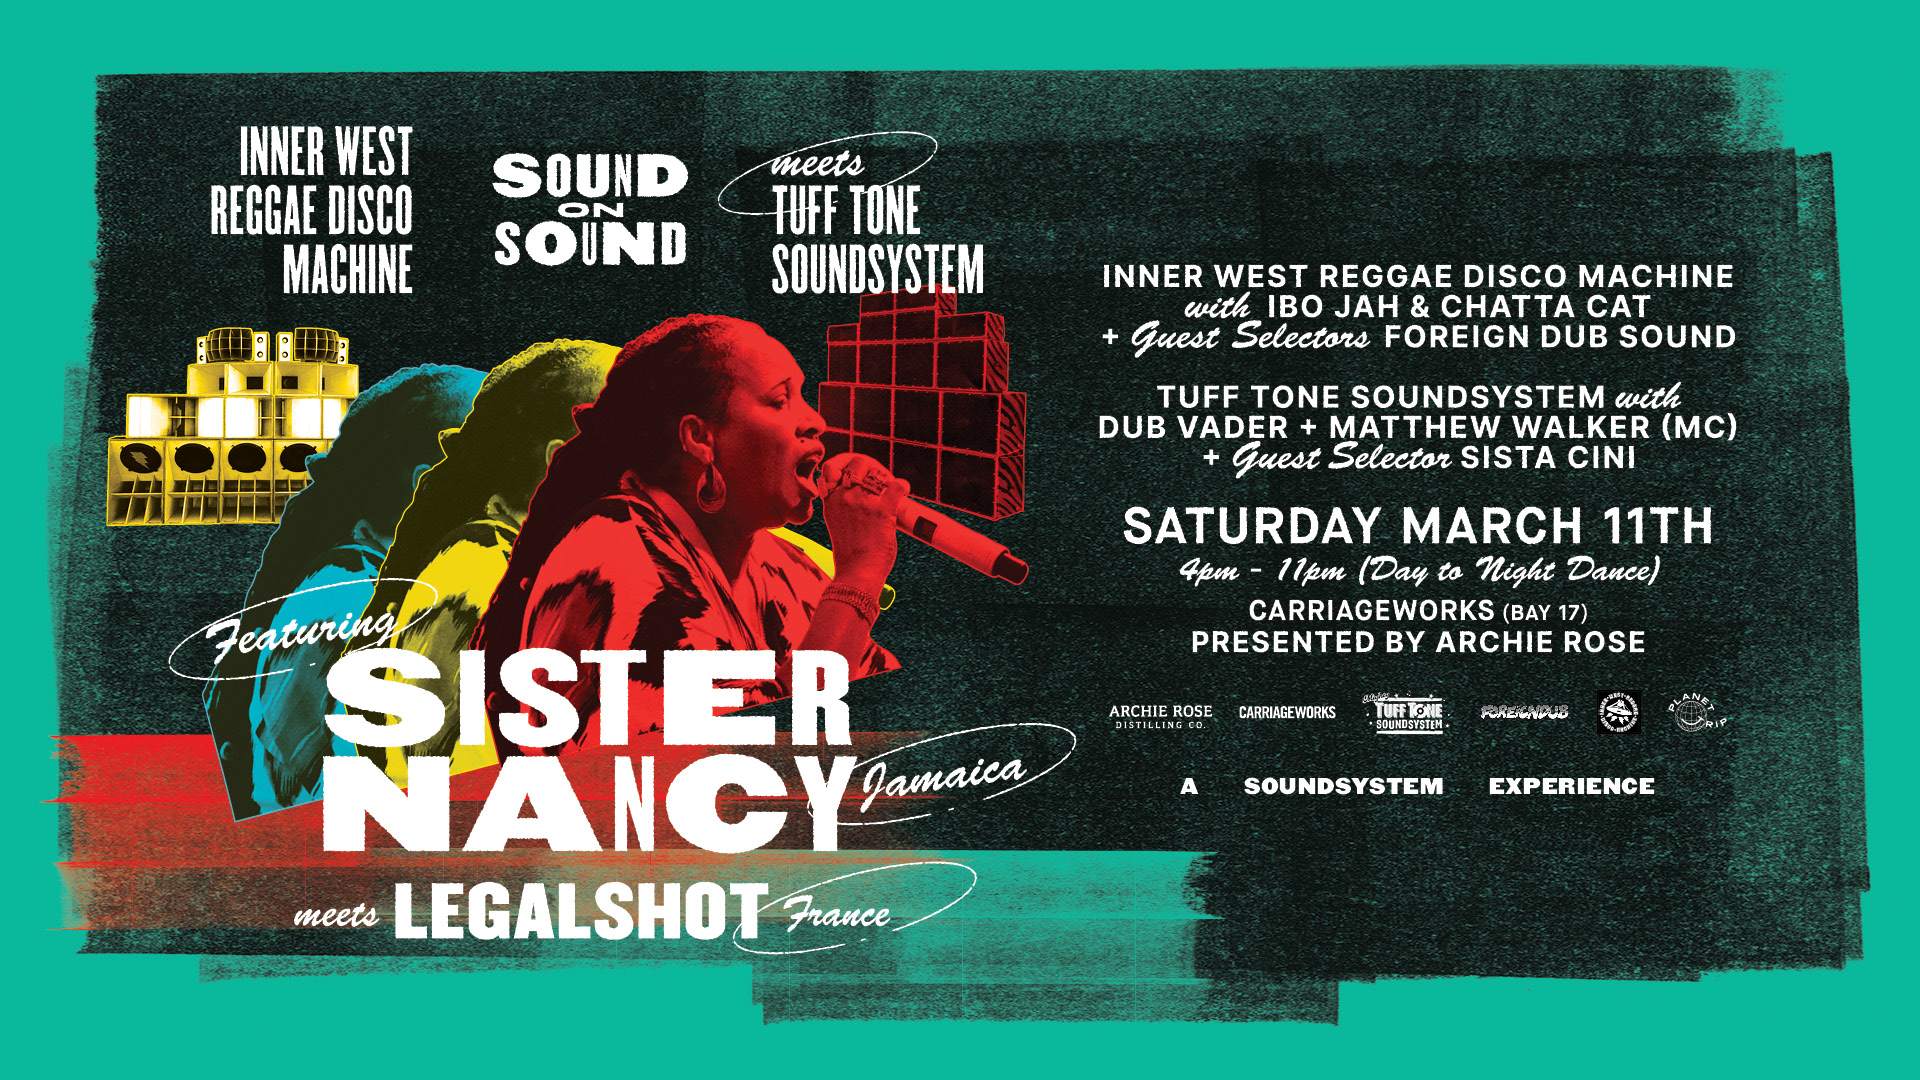 Sound on Sound - Sister Nancy  Inner West Reggae Disco Machine meets Tuff Tone Soundsystem - Página frontal